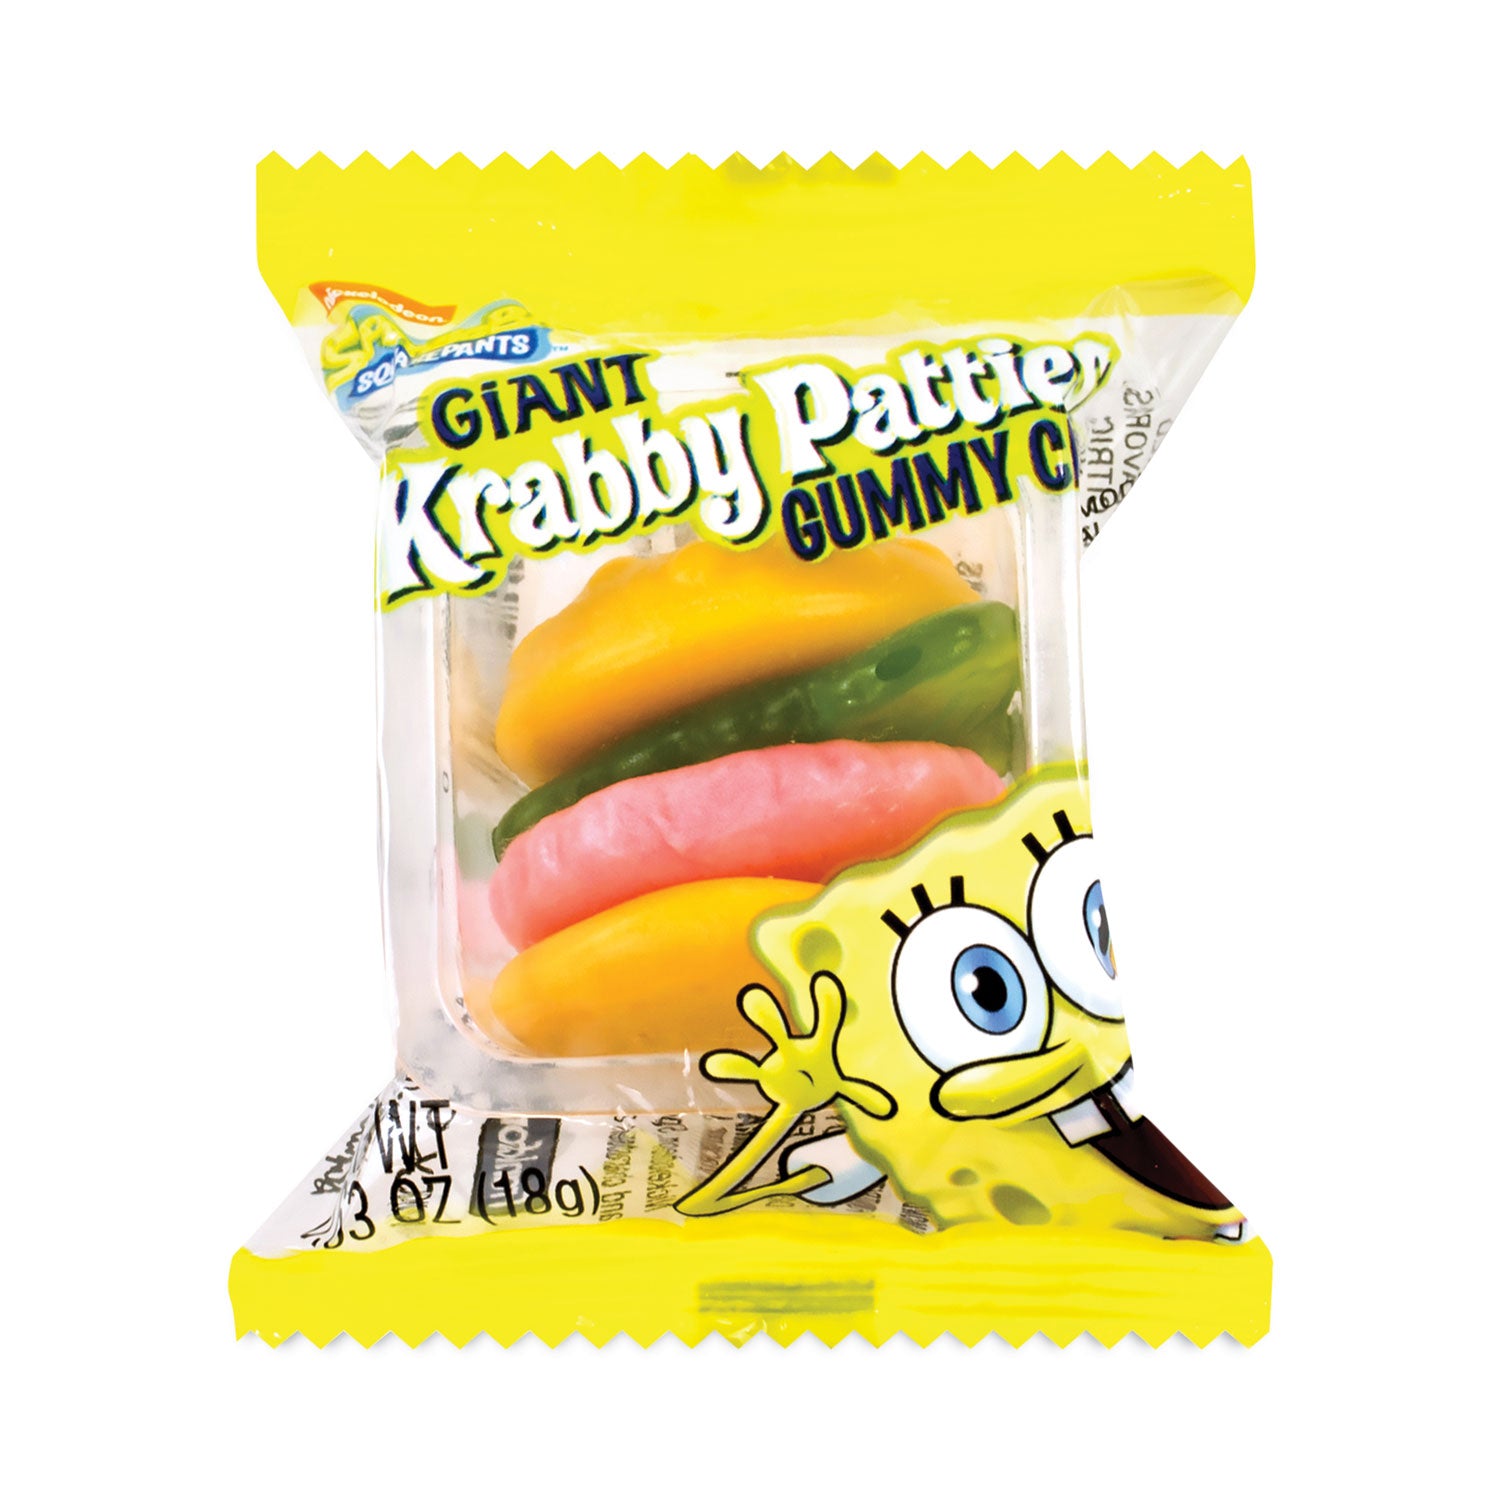 spongebob-squarepants-giant-krabby-patties-gummy-candy-063-oz-pack-36-carton-ships-in-1-3-business-days_grr2500006 - 1